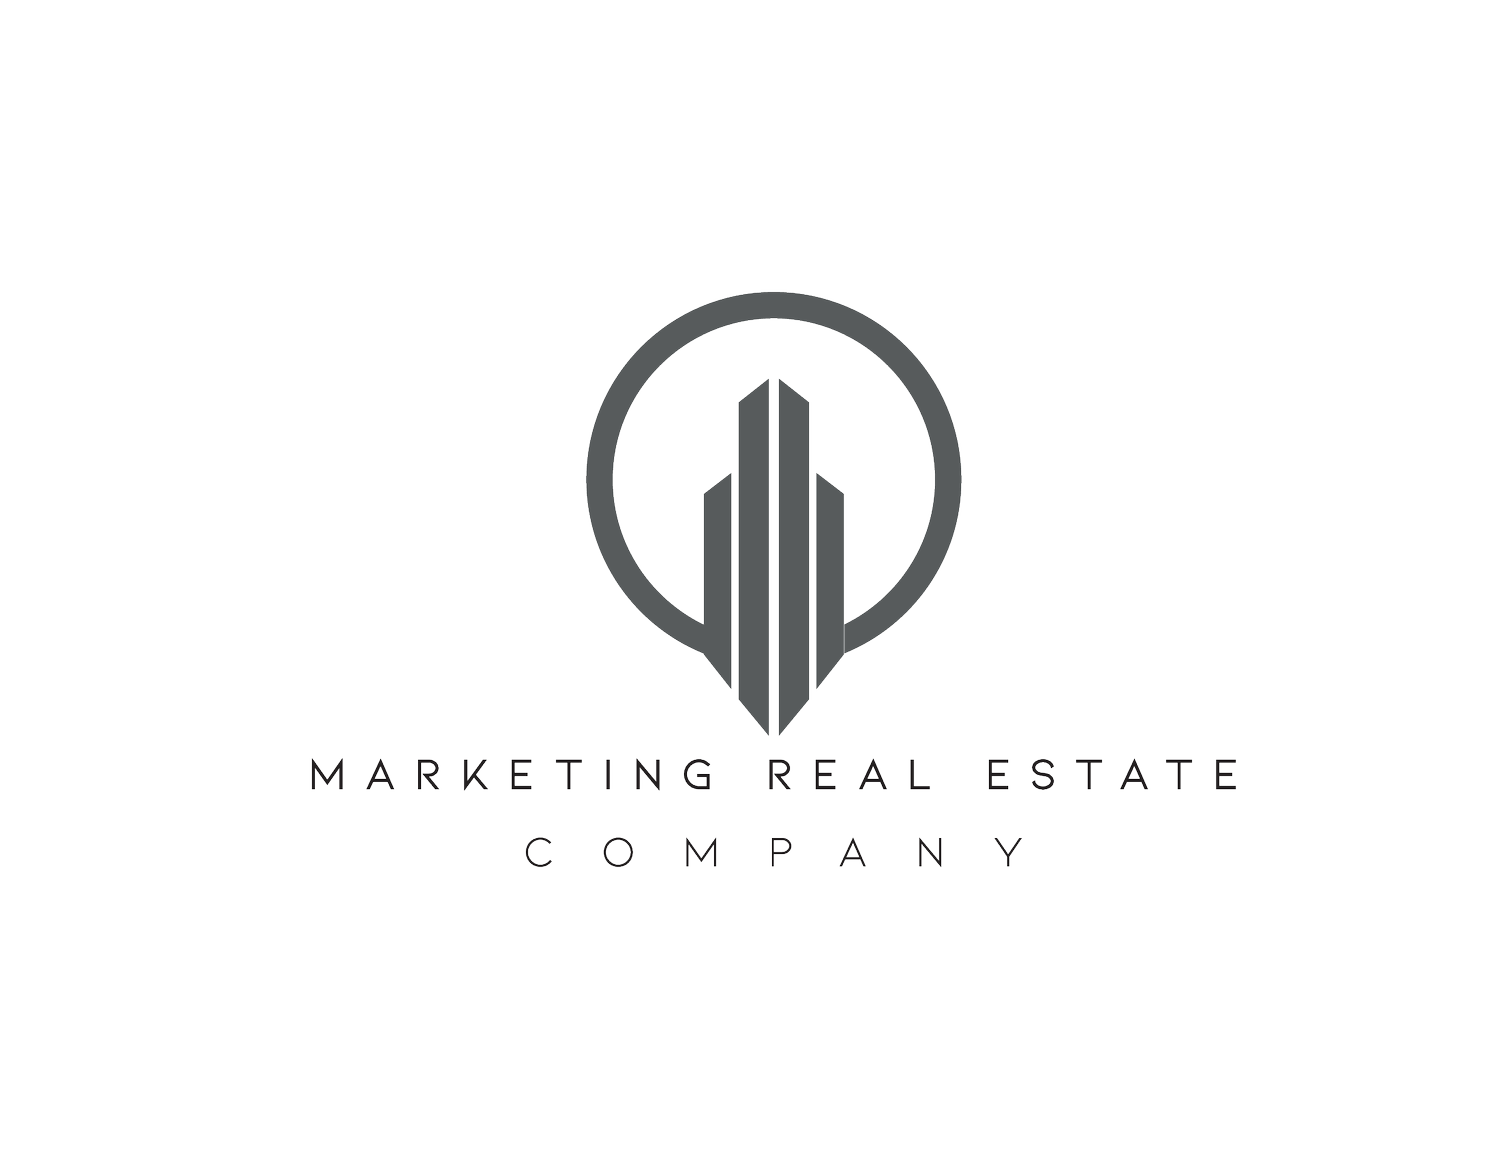 Marketing Real Estate Company